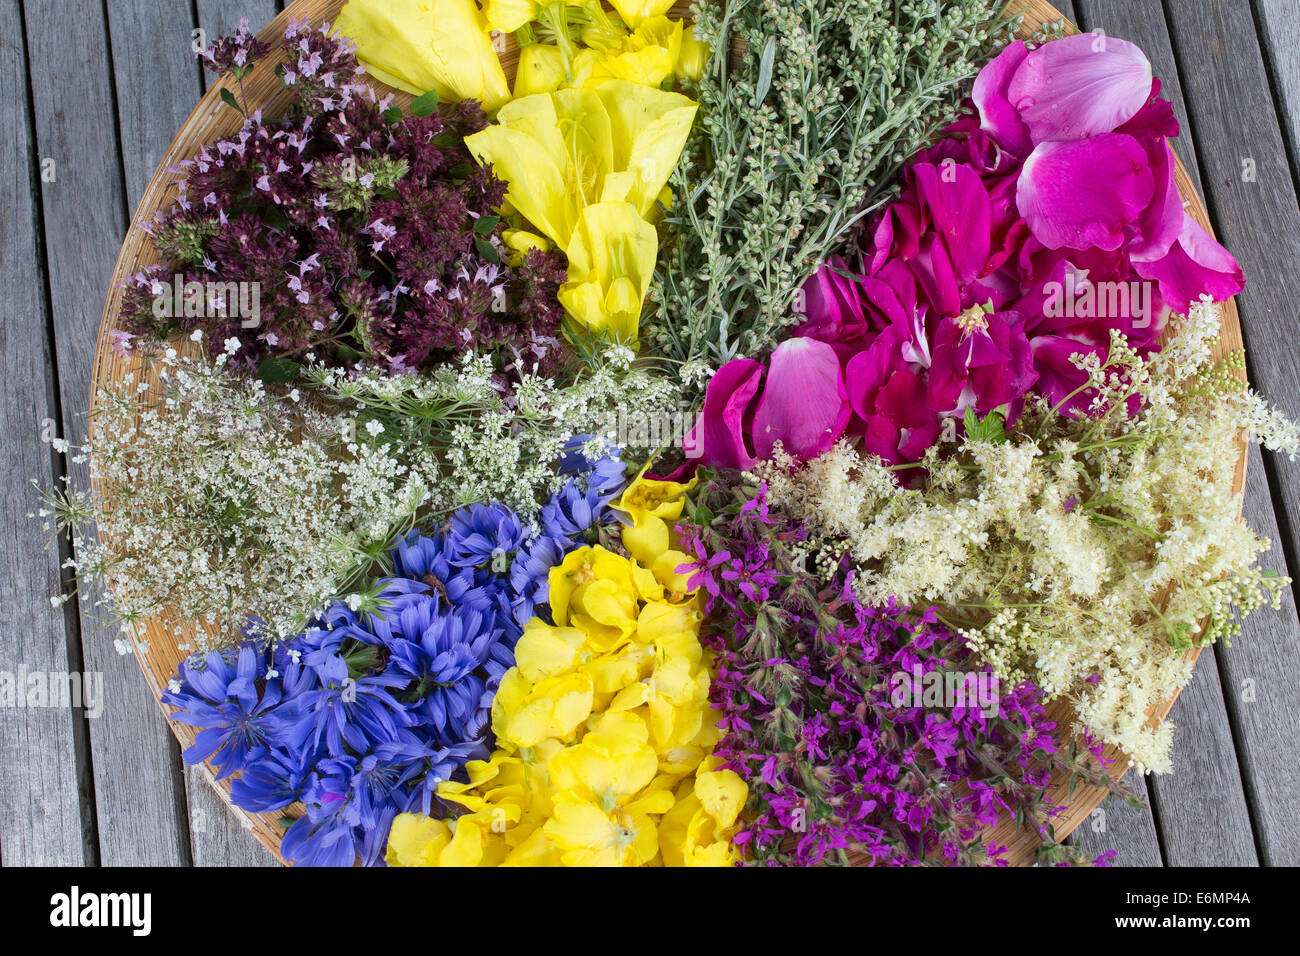 Blütenteller, Blüten, Blumen, Kräuter, Kräuter sammeln, Kräuterernte, Blütenblätter auf einem Teller sortiert zum Trocknen, essb Foto de stock